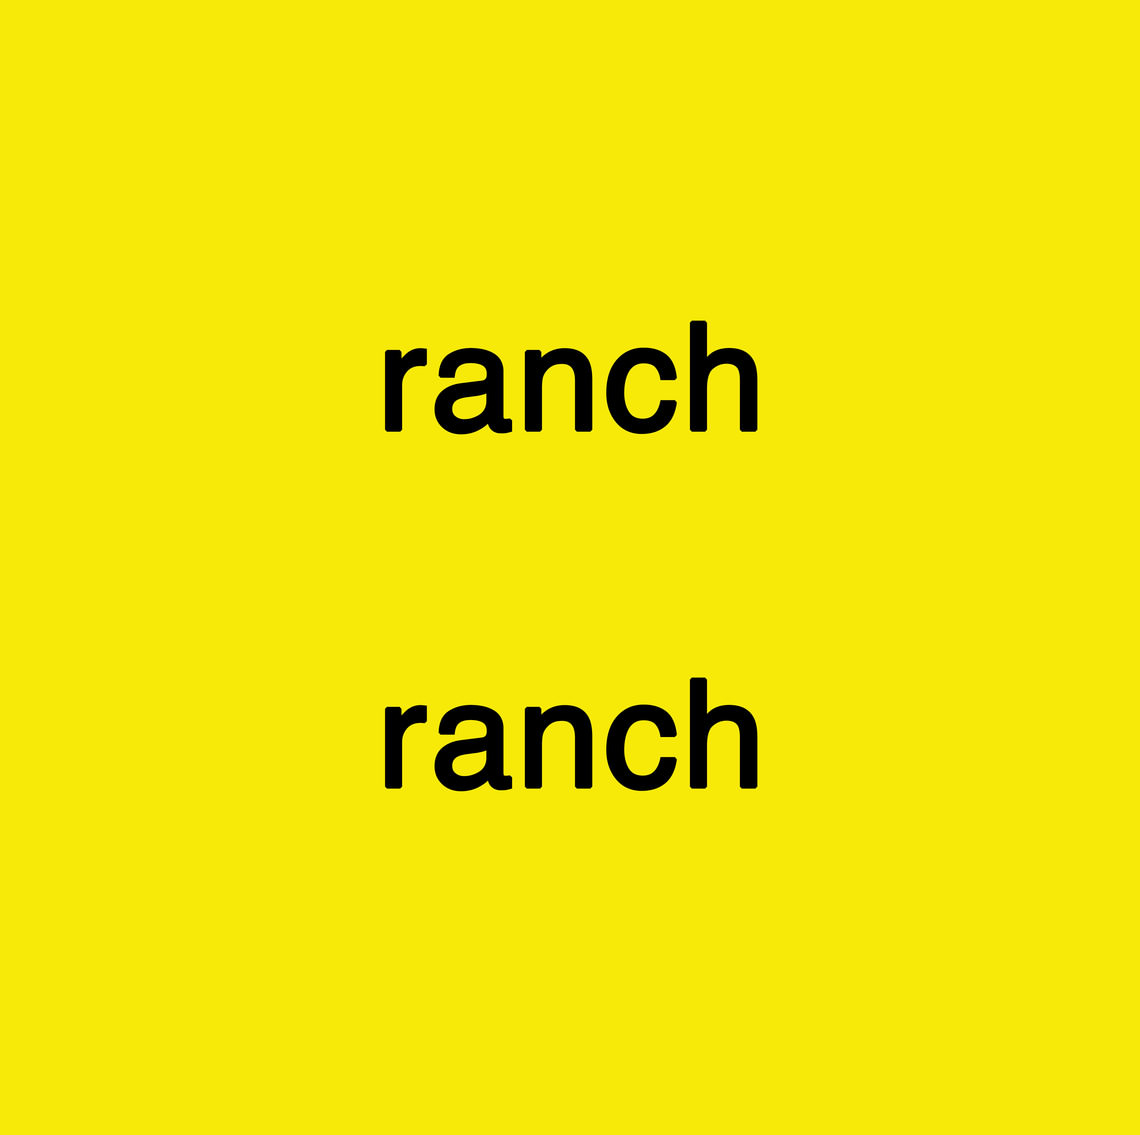  - ranch ranch